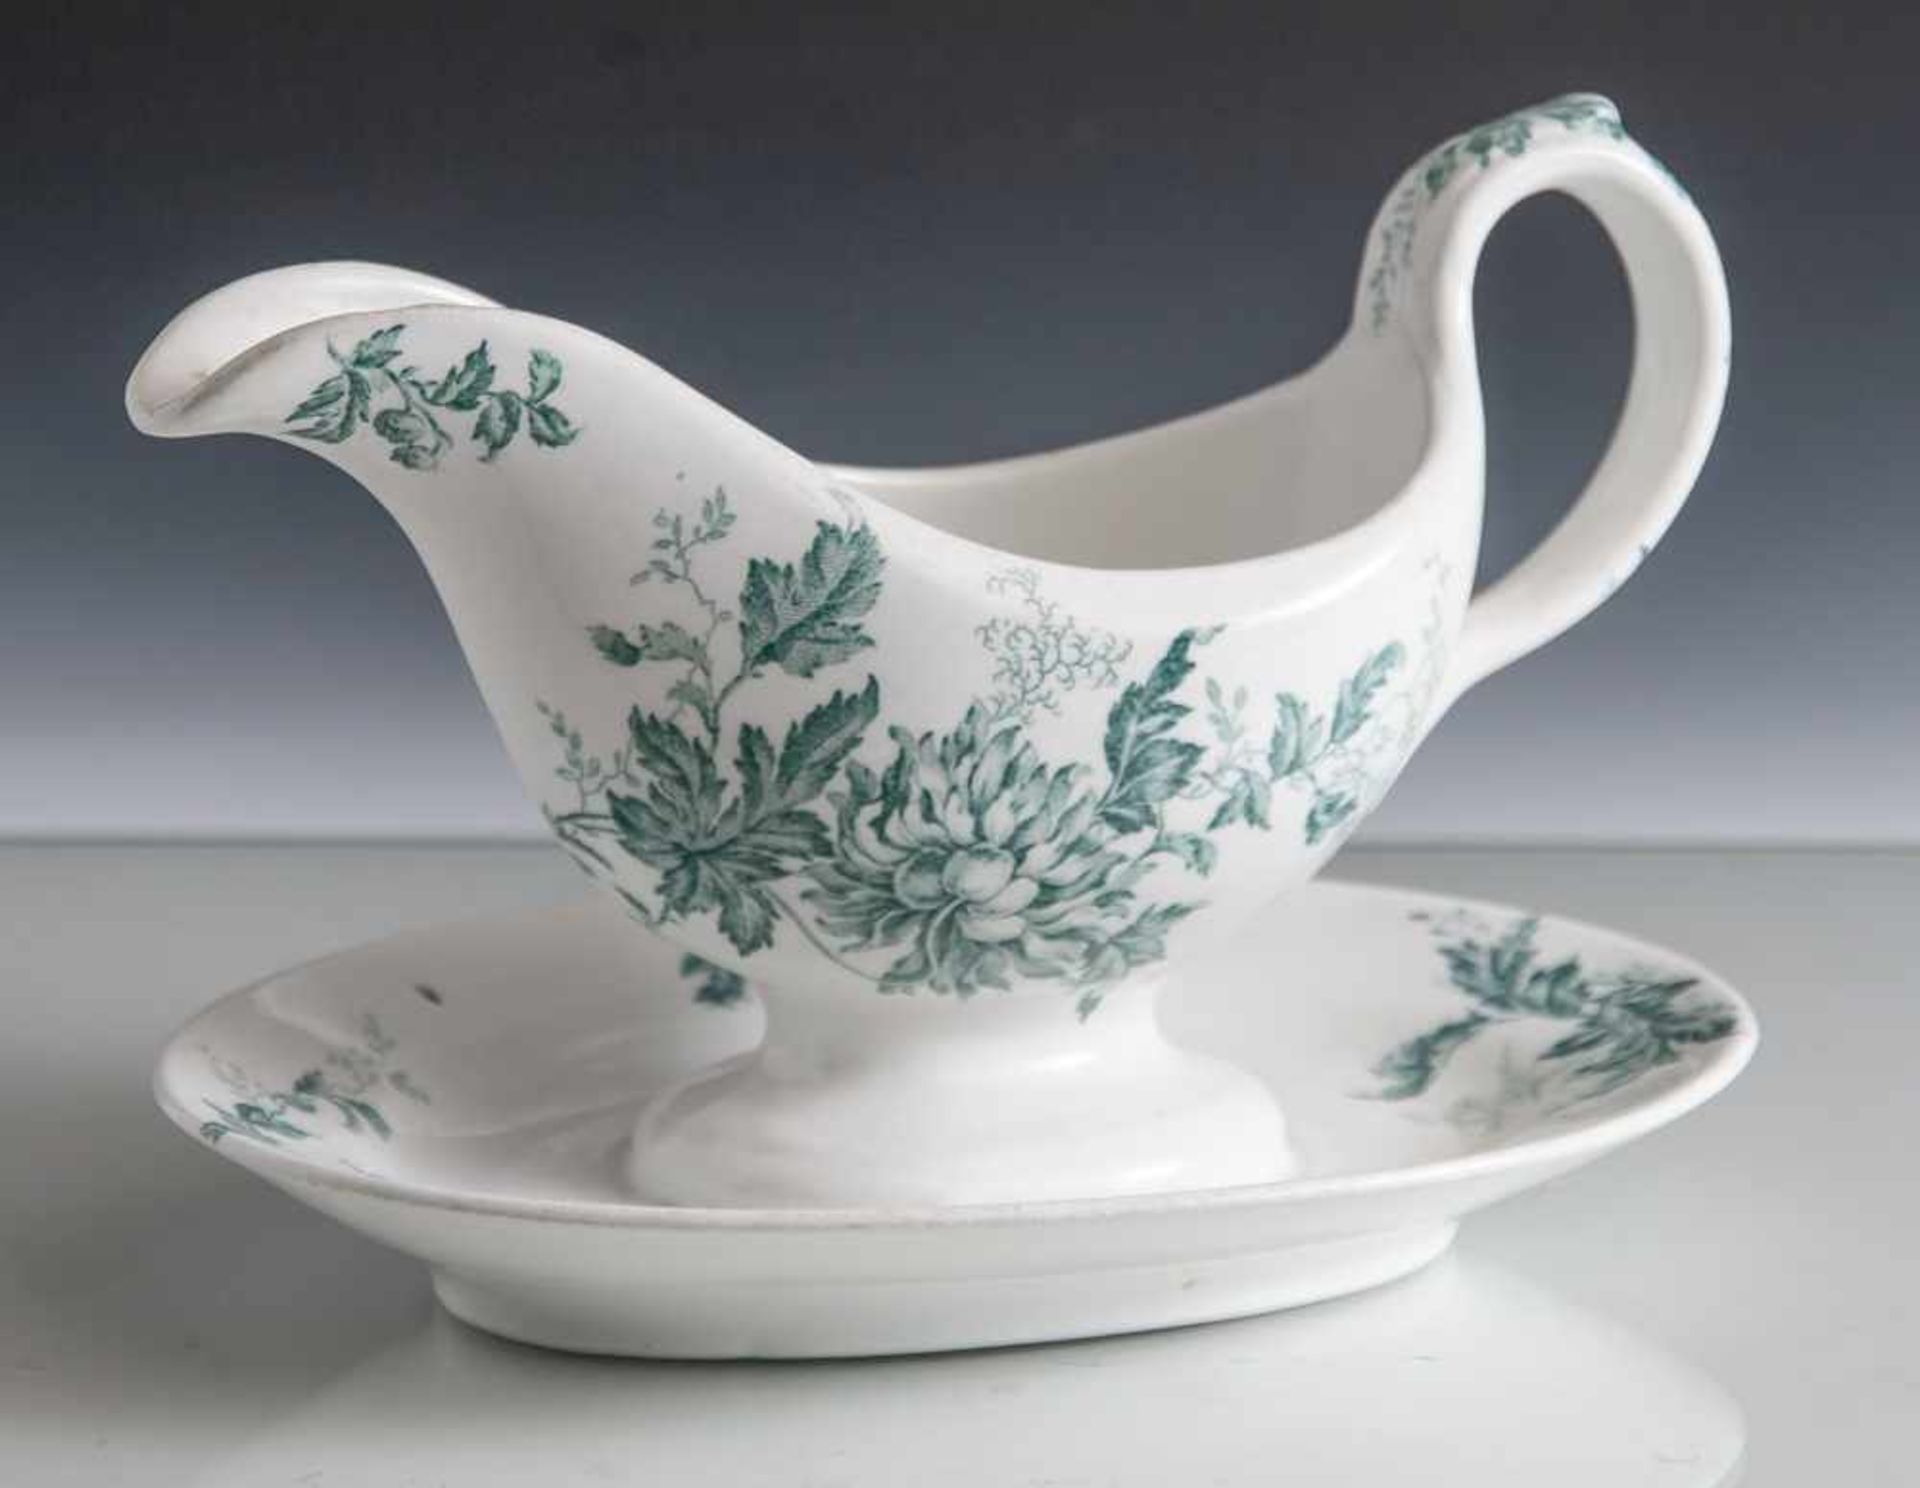 Sauciere, Franz Anton Mehlem/Royal Bonn, Manufakturmarke, Keramik, polychromes, florales Dekor. H.